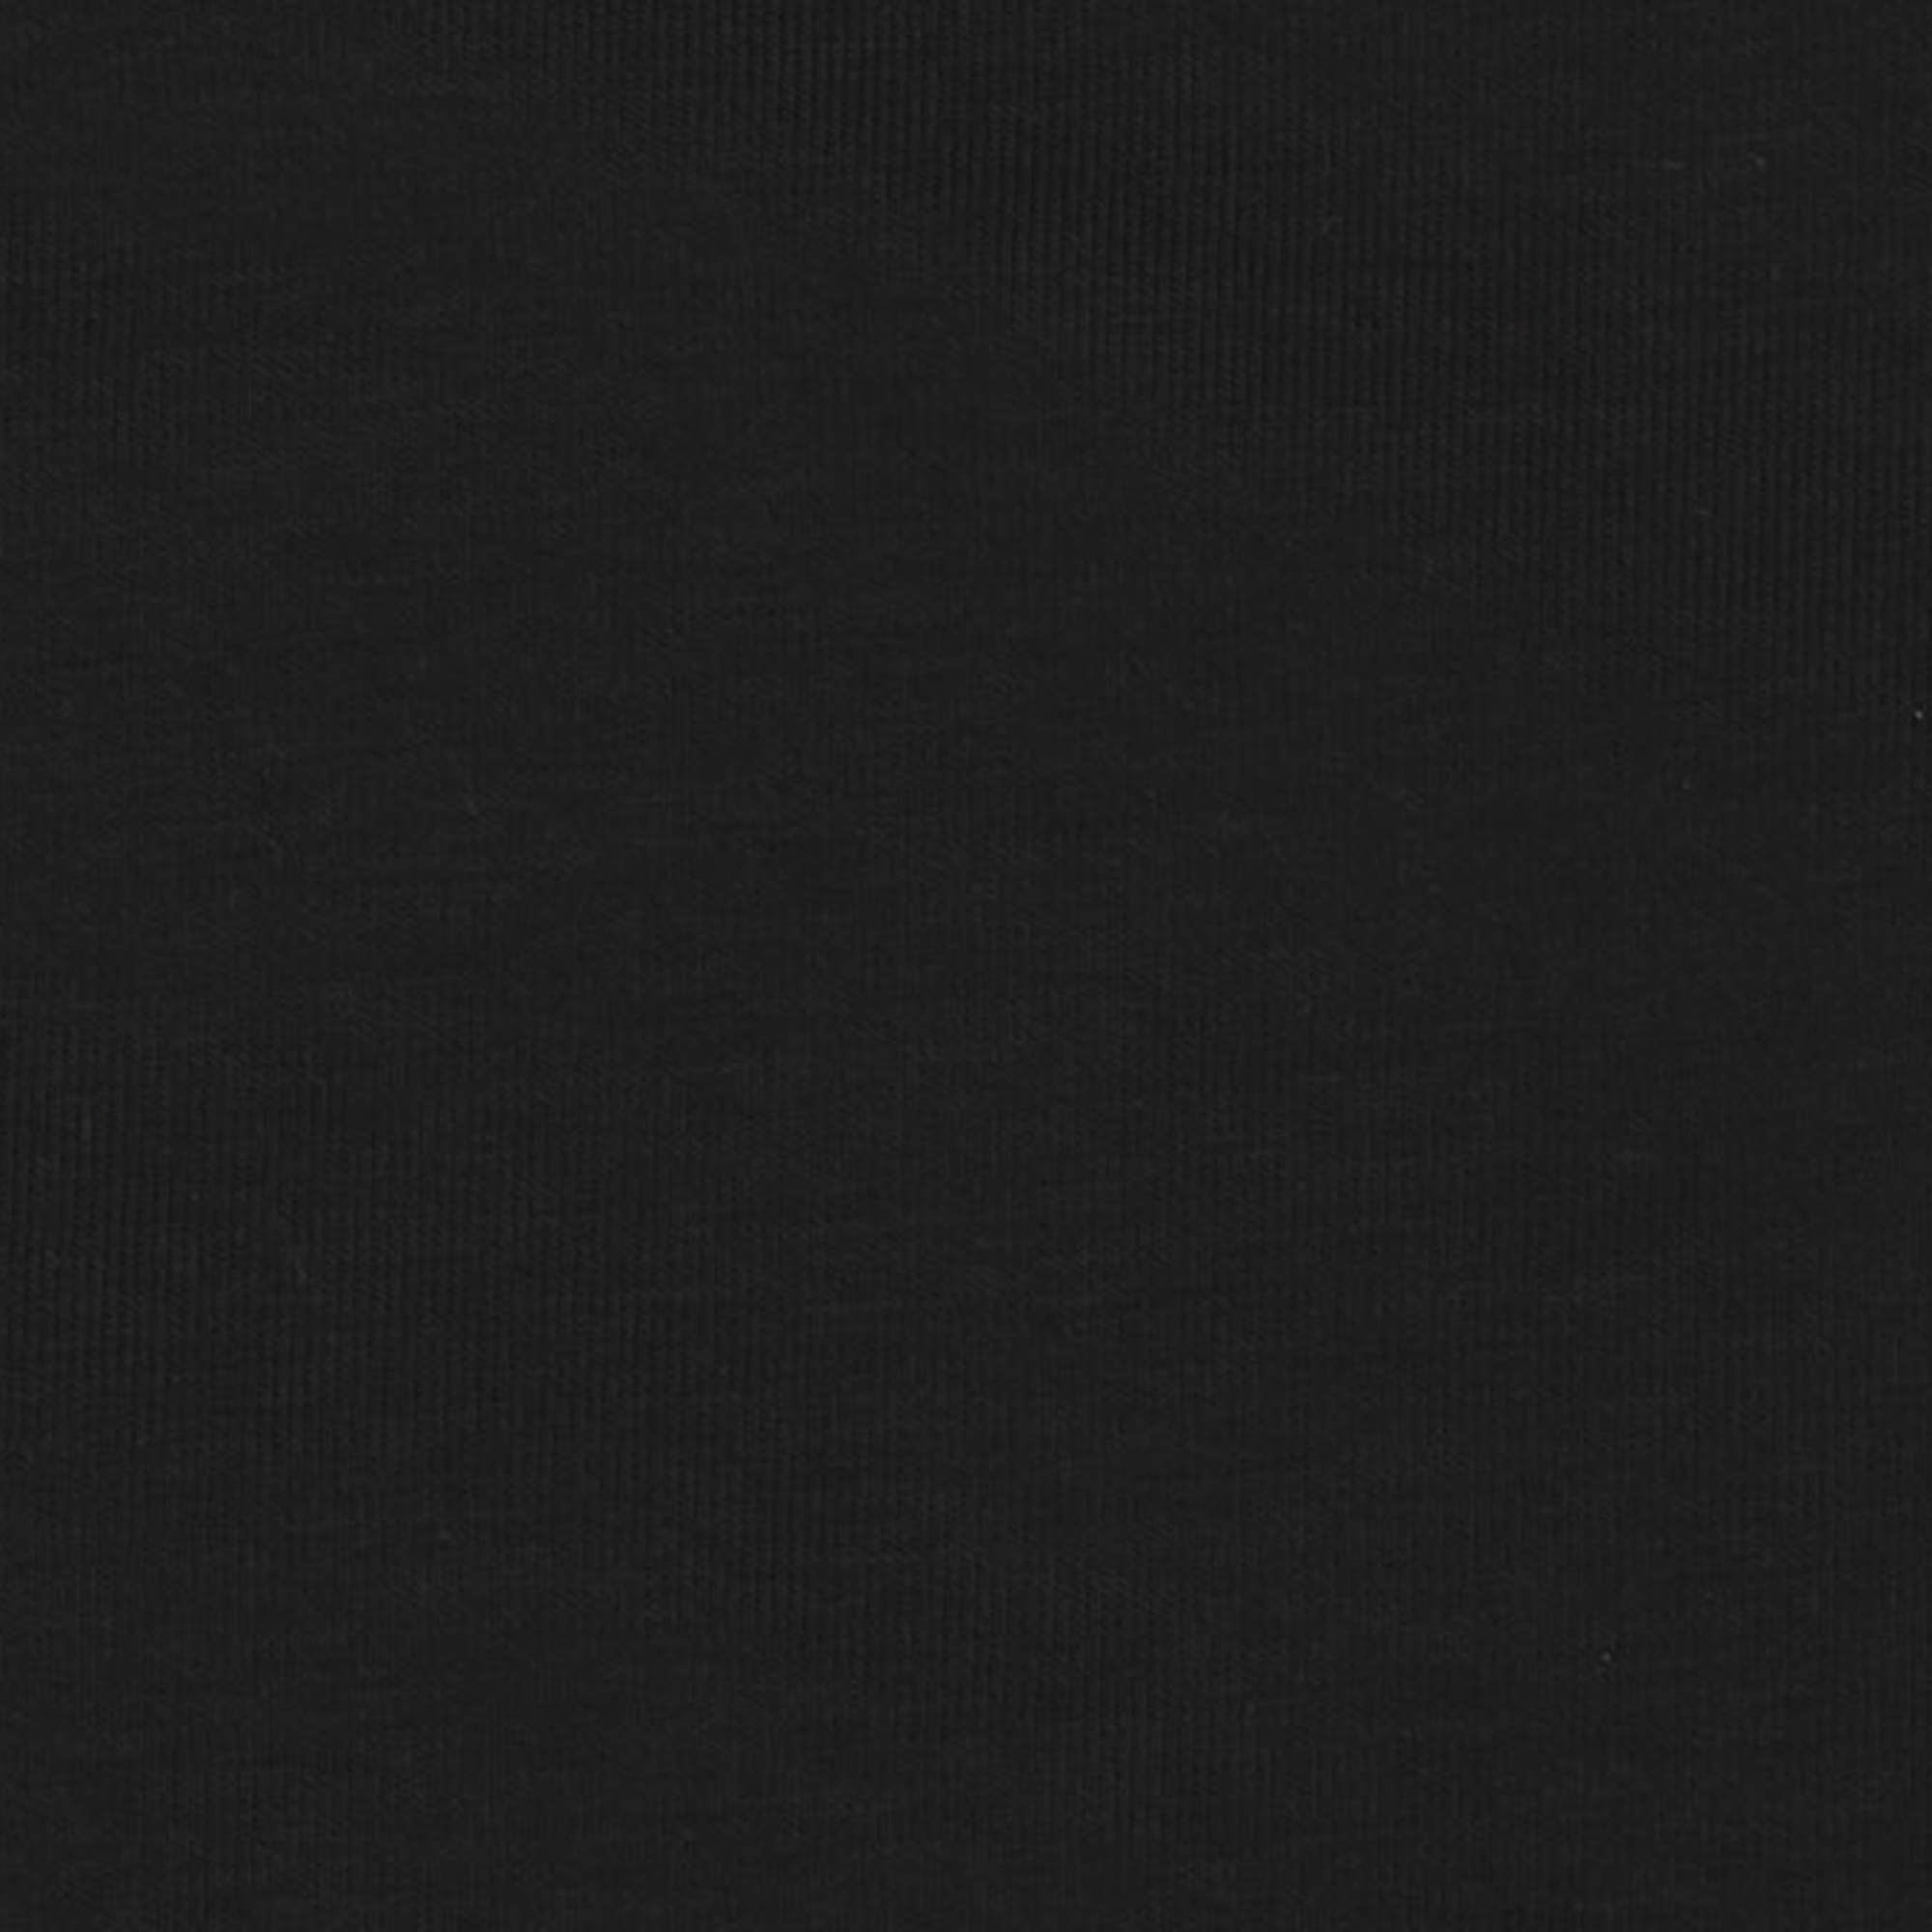 Мужская футболка Pantelemone MF-914 48 черная, цвет черный, размер 48 - фото 3